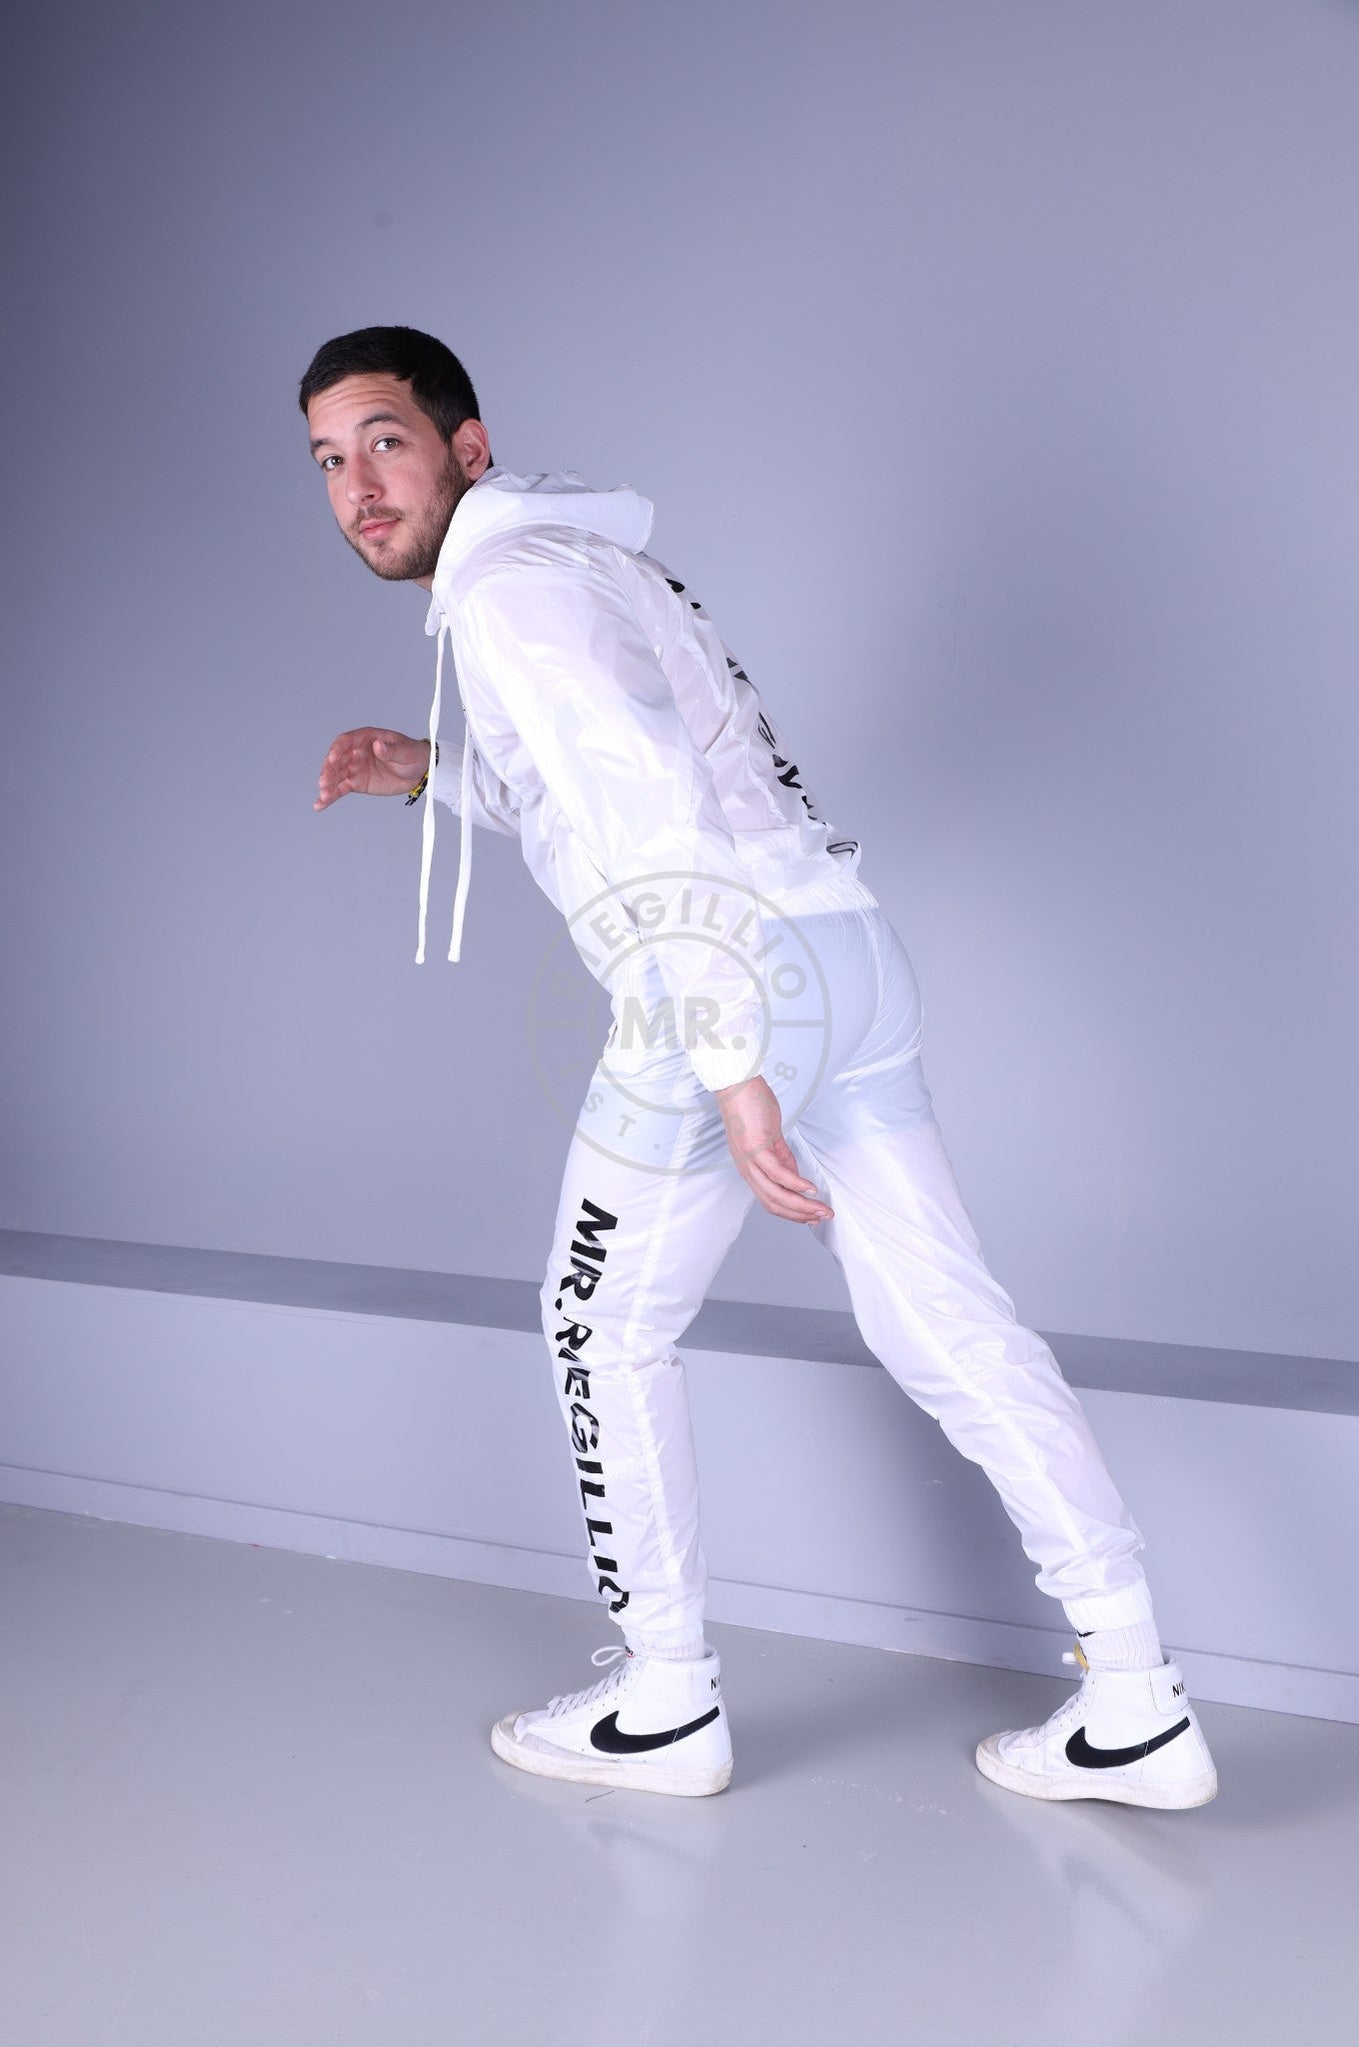 Shiny Nylon Tracksuit Pants - White at MR. Riegillio